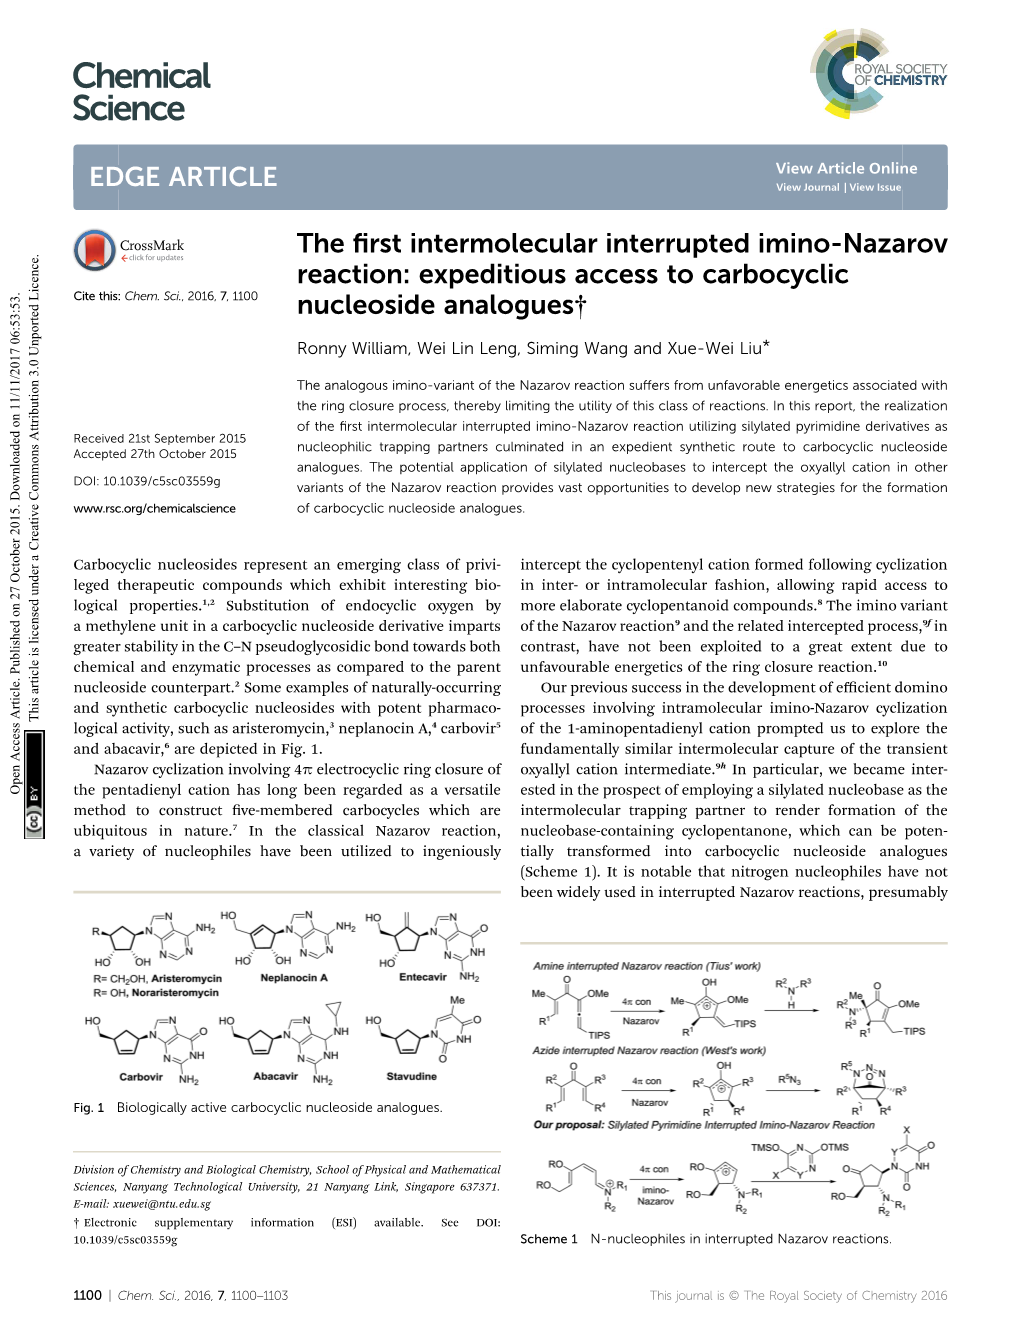 The First Intermolecular Interrupted Imino-Nazarov Reaction